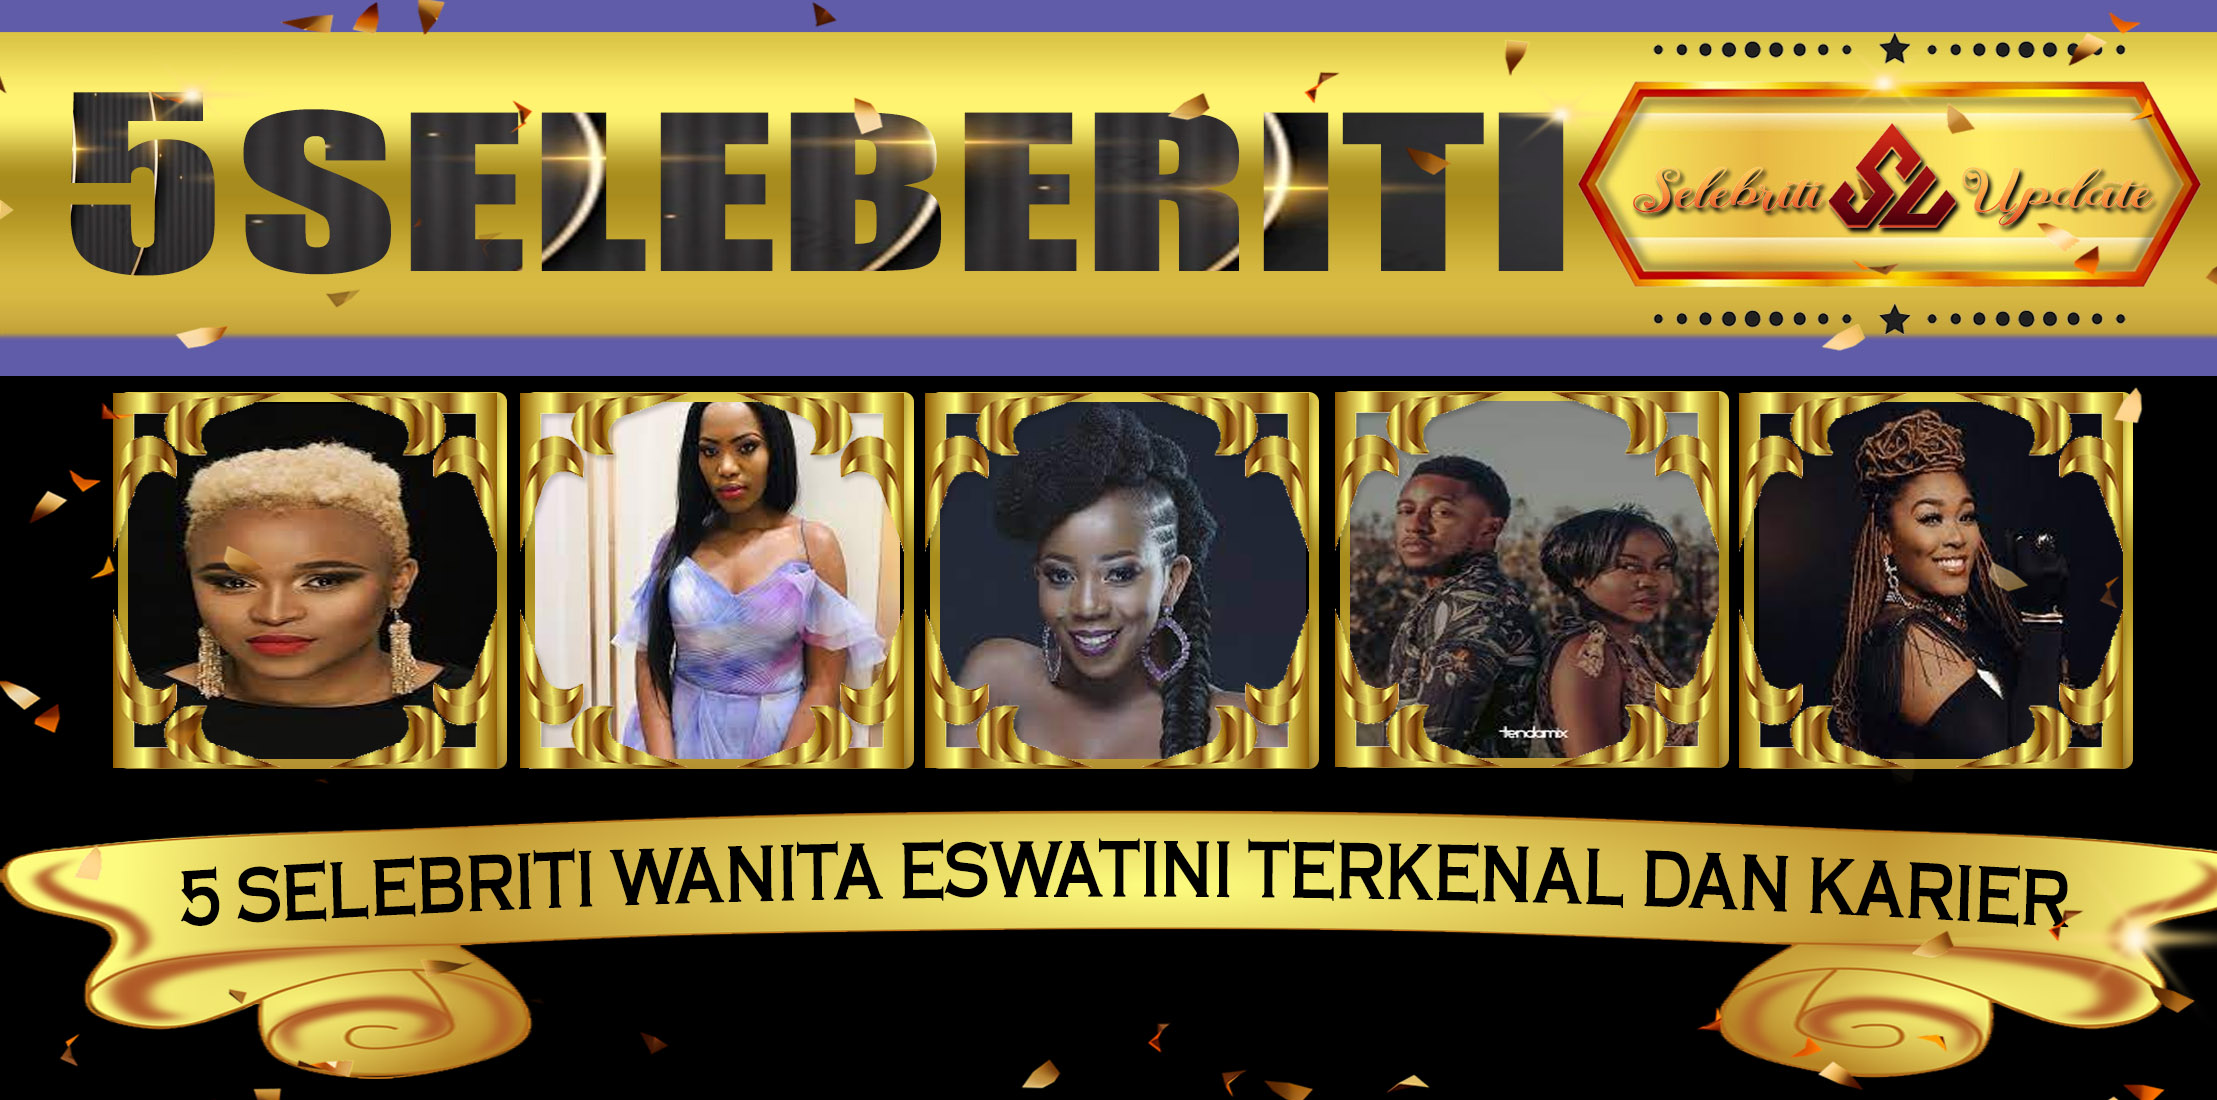 5 Selebriti Wanita Eswatini terkenal dan karier